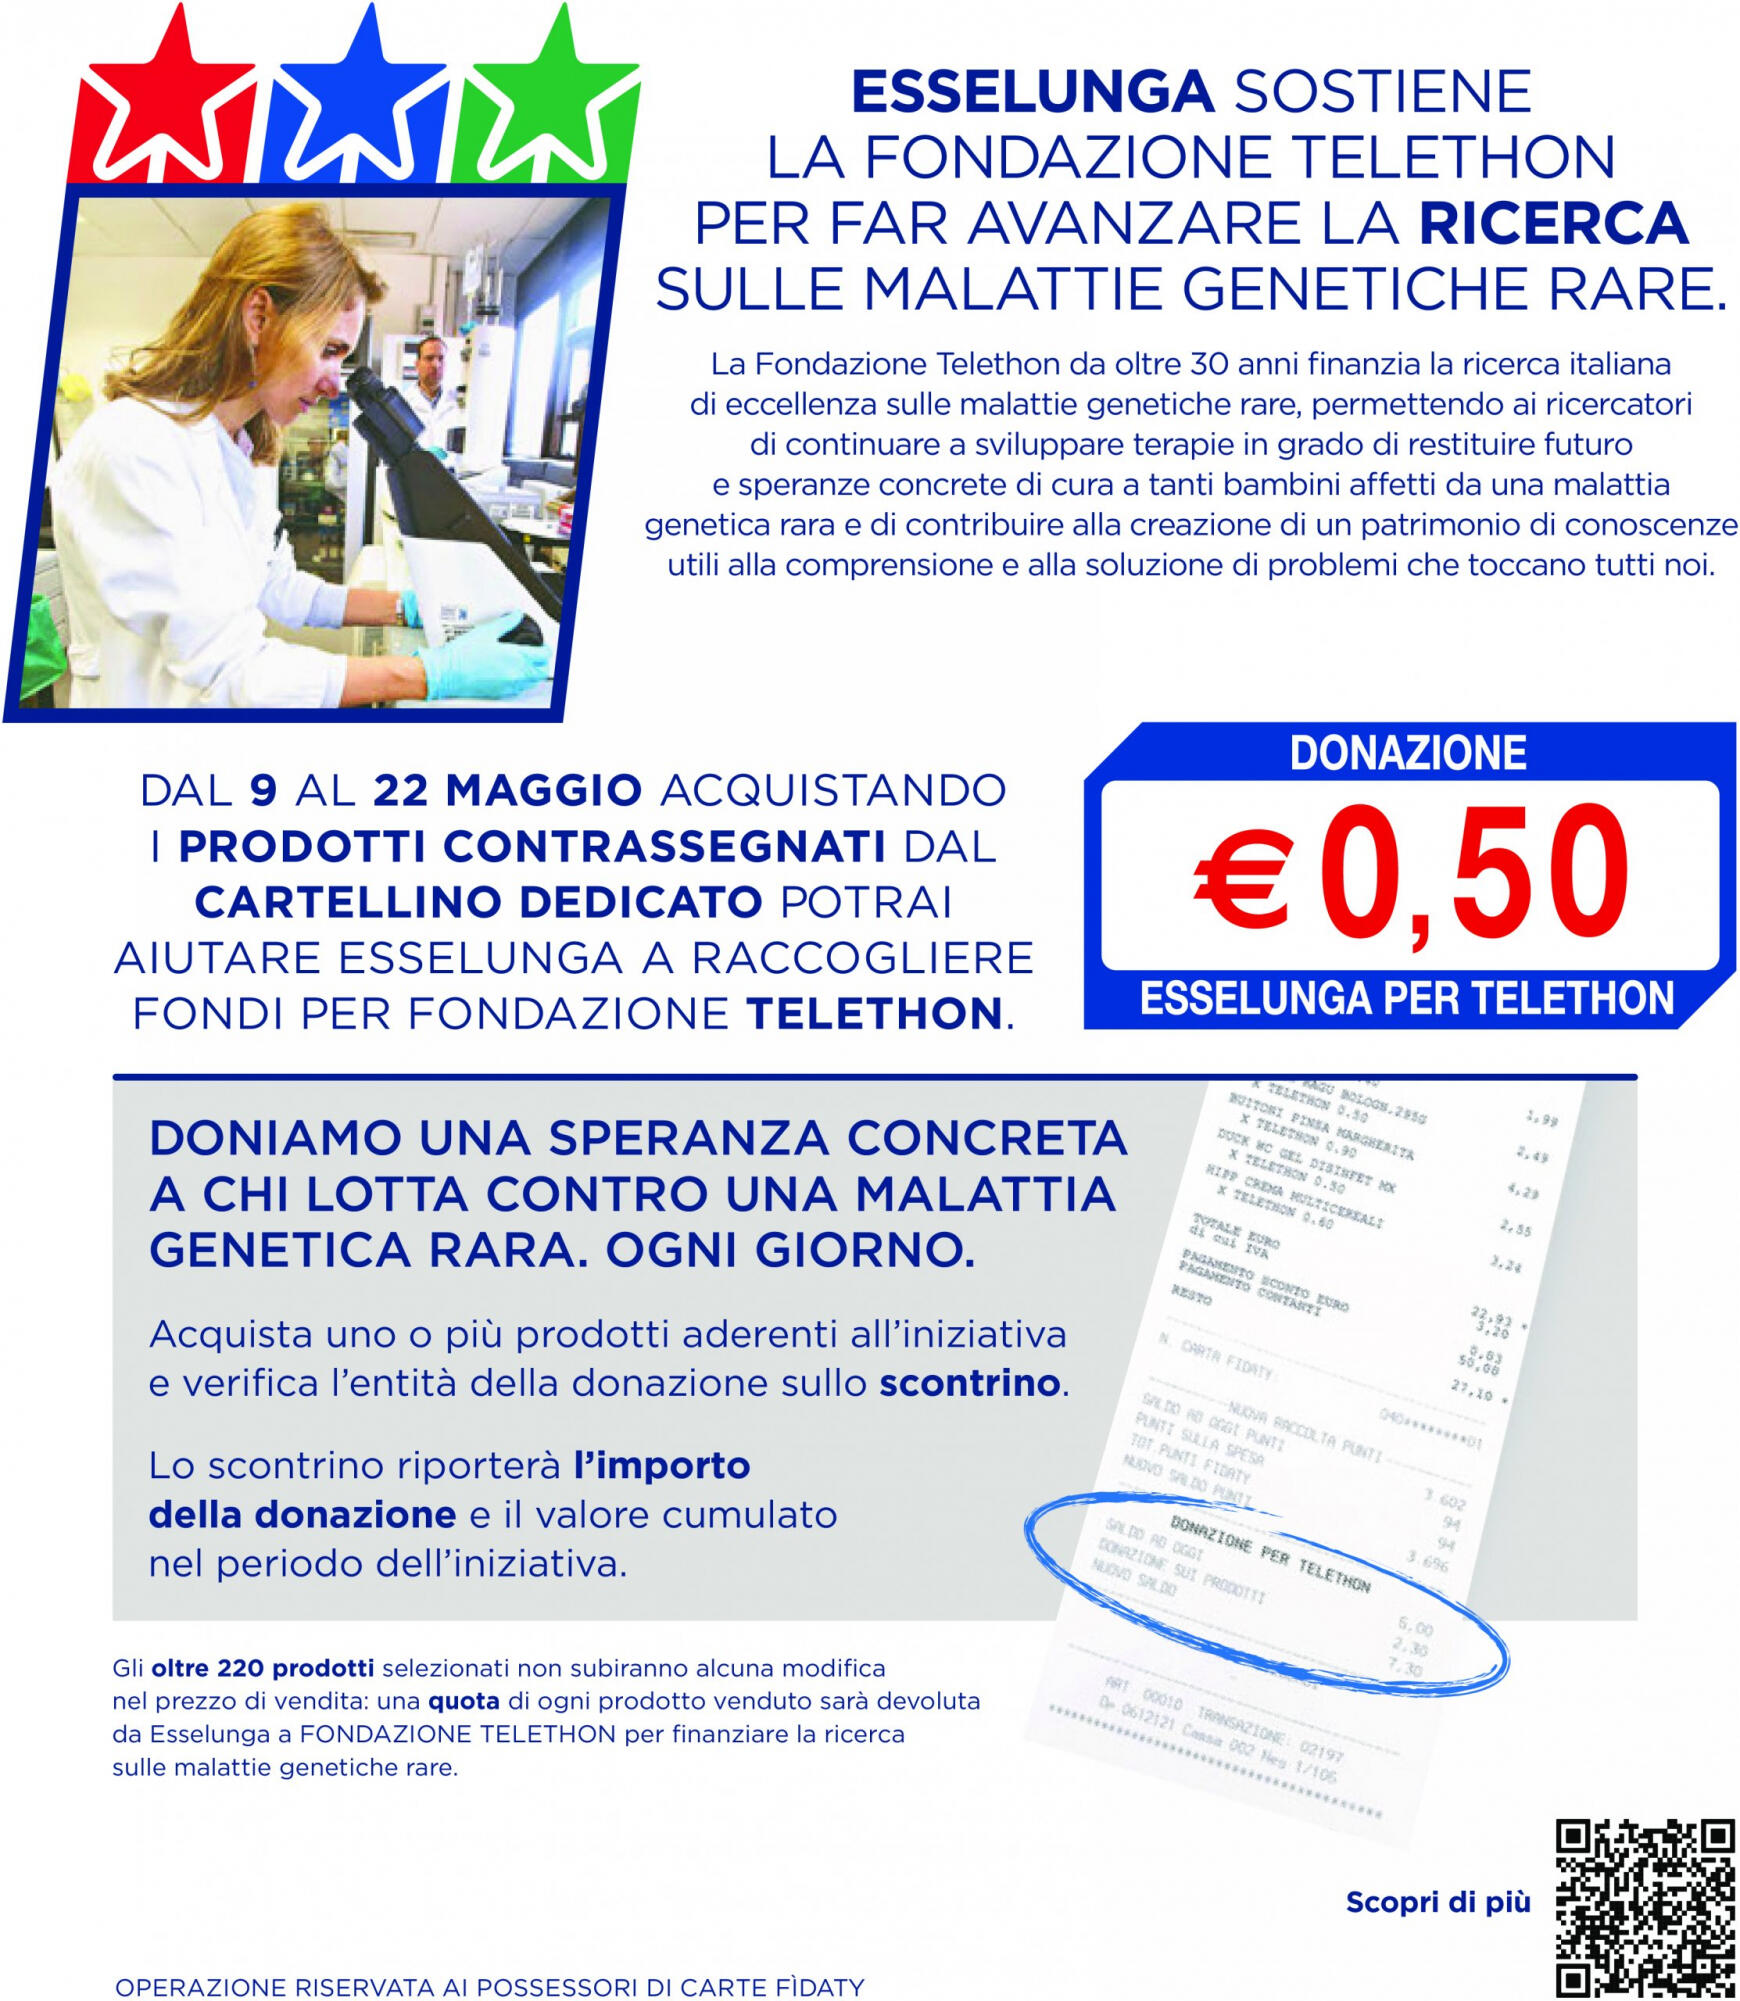 esselunga - Nuovo volantino Esselunga - Donazione Per Telethon 09.05. - 22.05. - page: 2